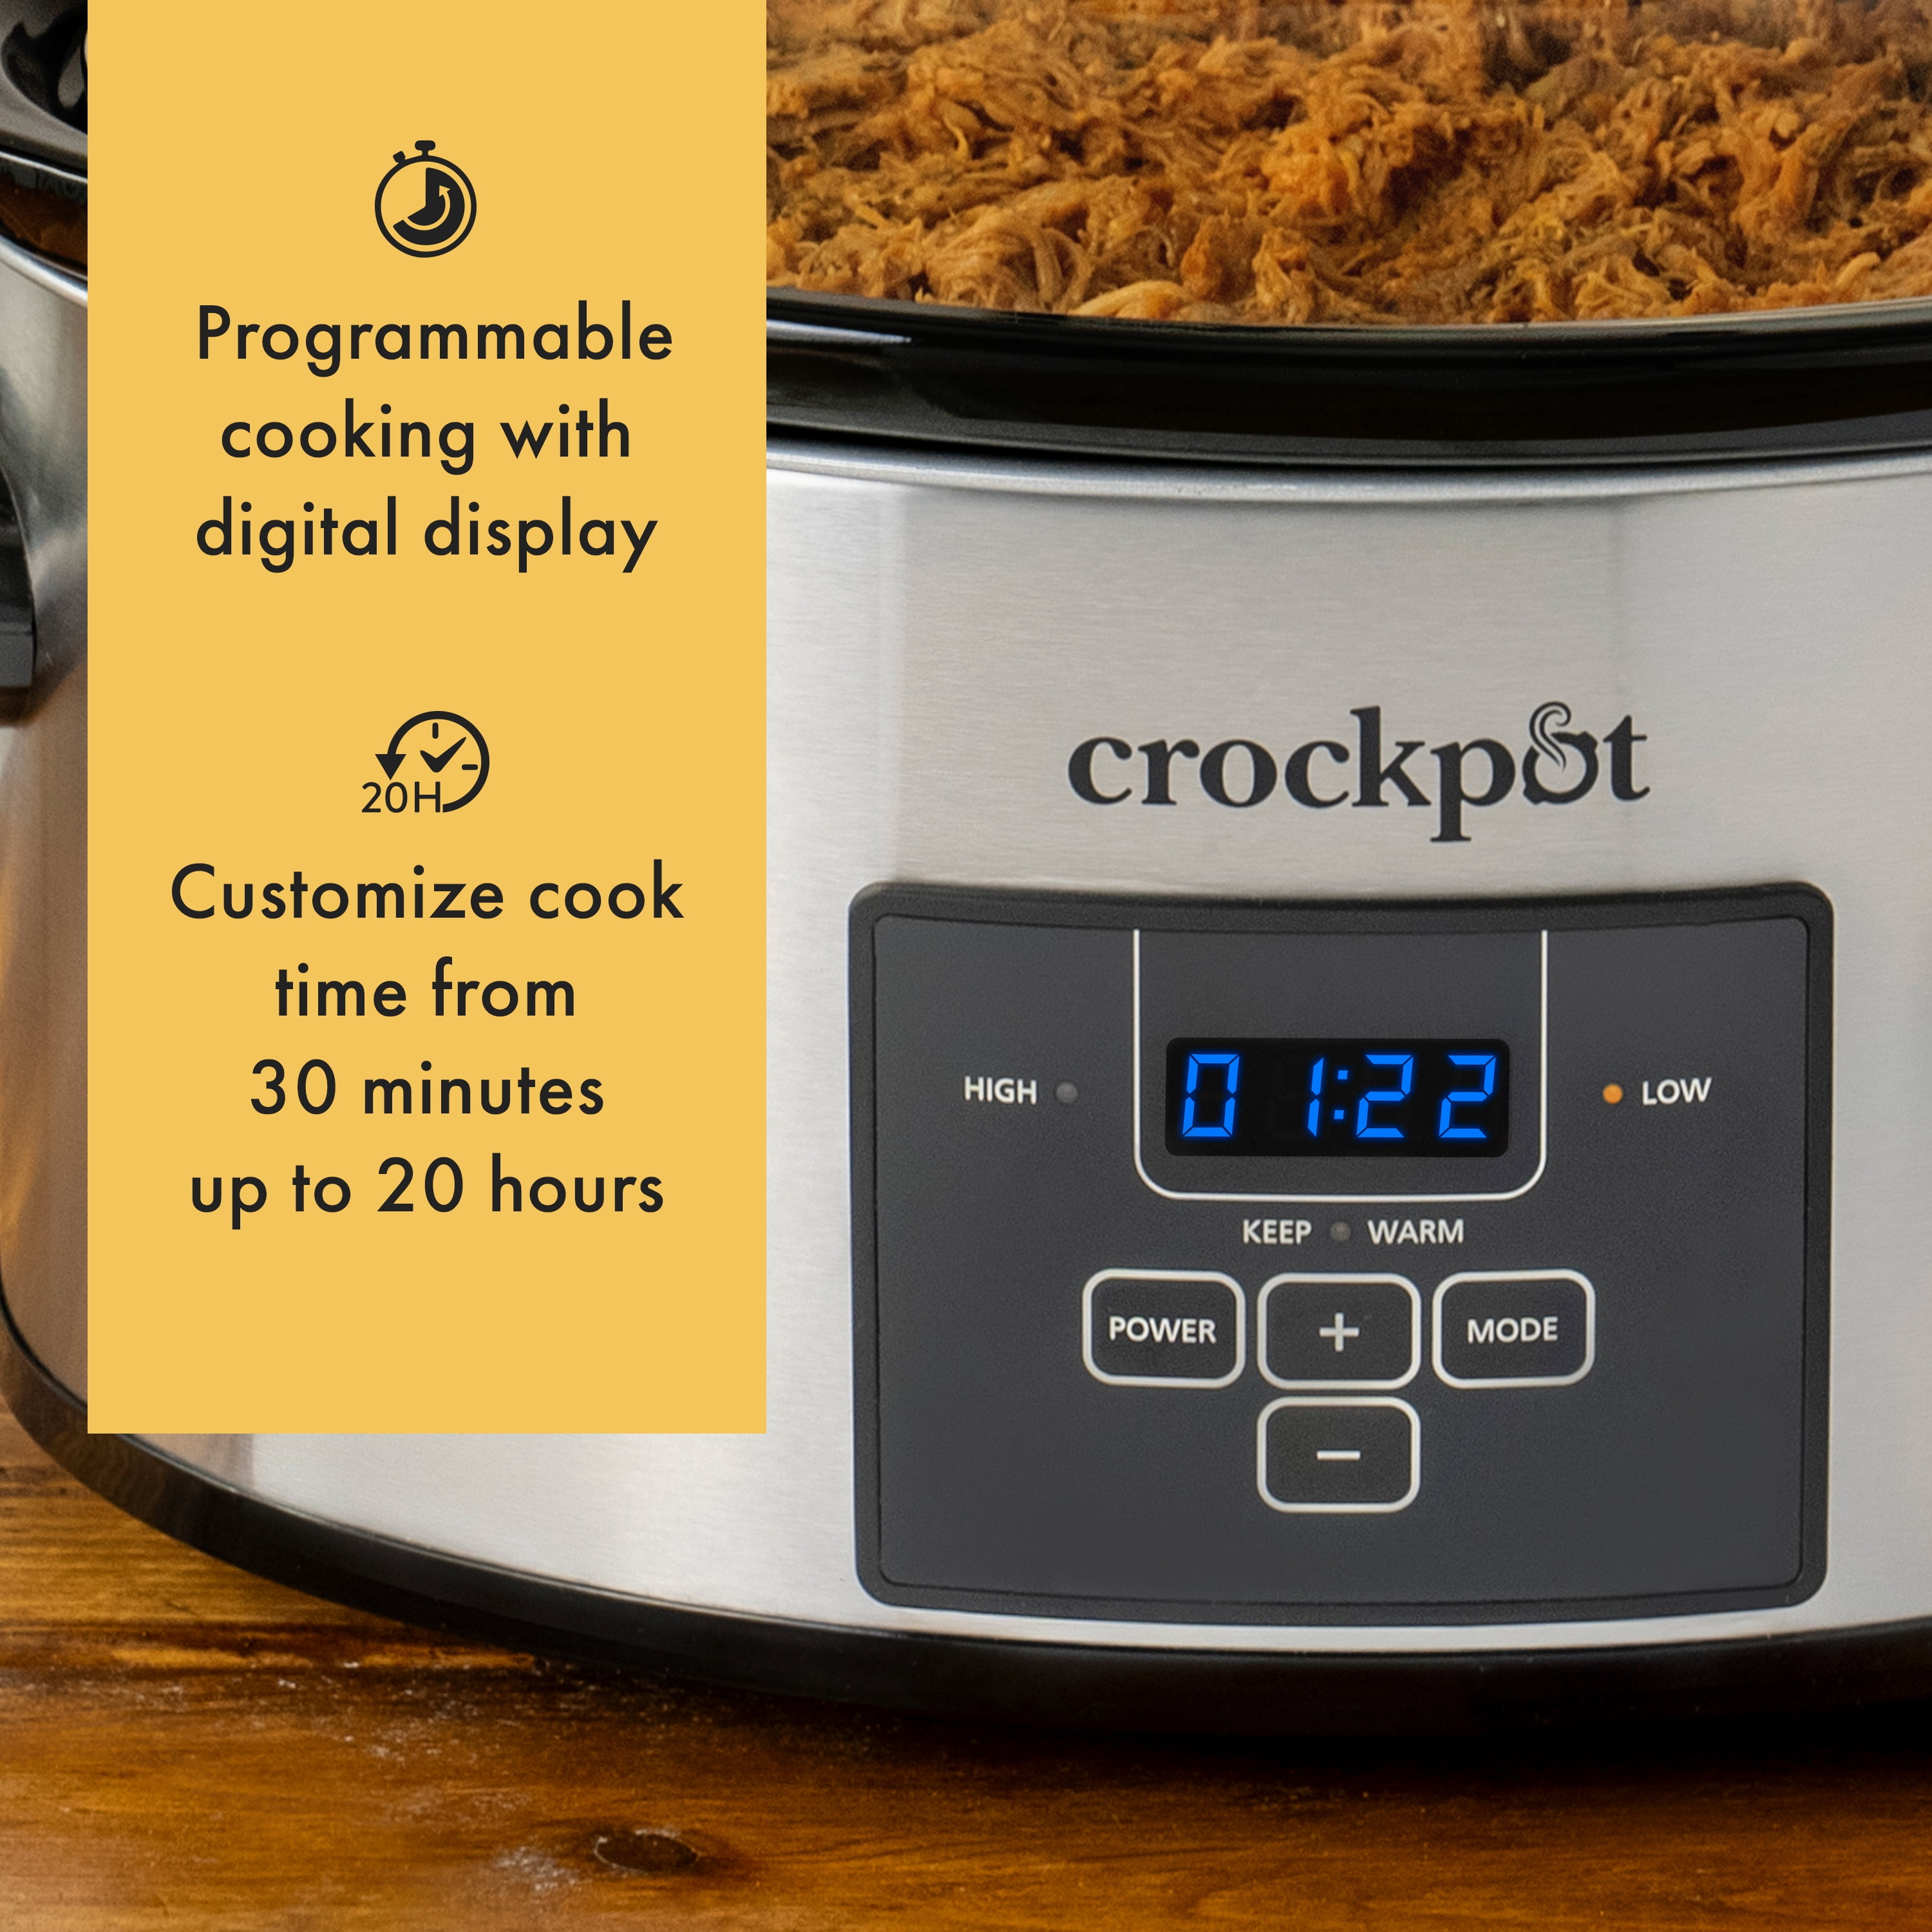 Crock Pot 6qt Choose-a-crock Slow Cooker - Stainless Steel : Target